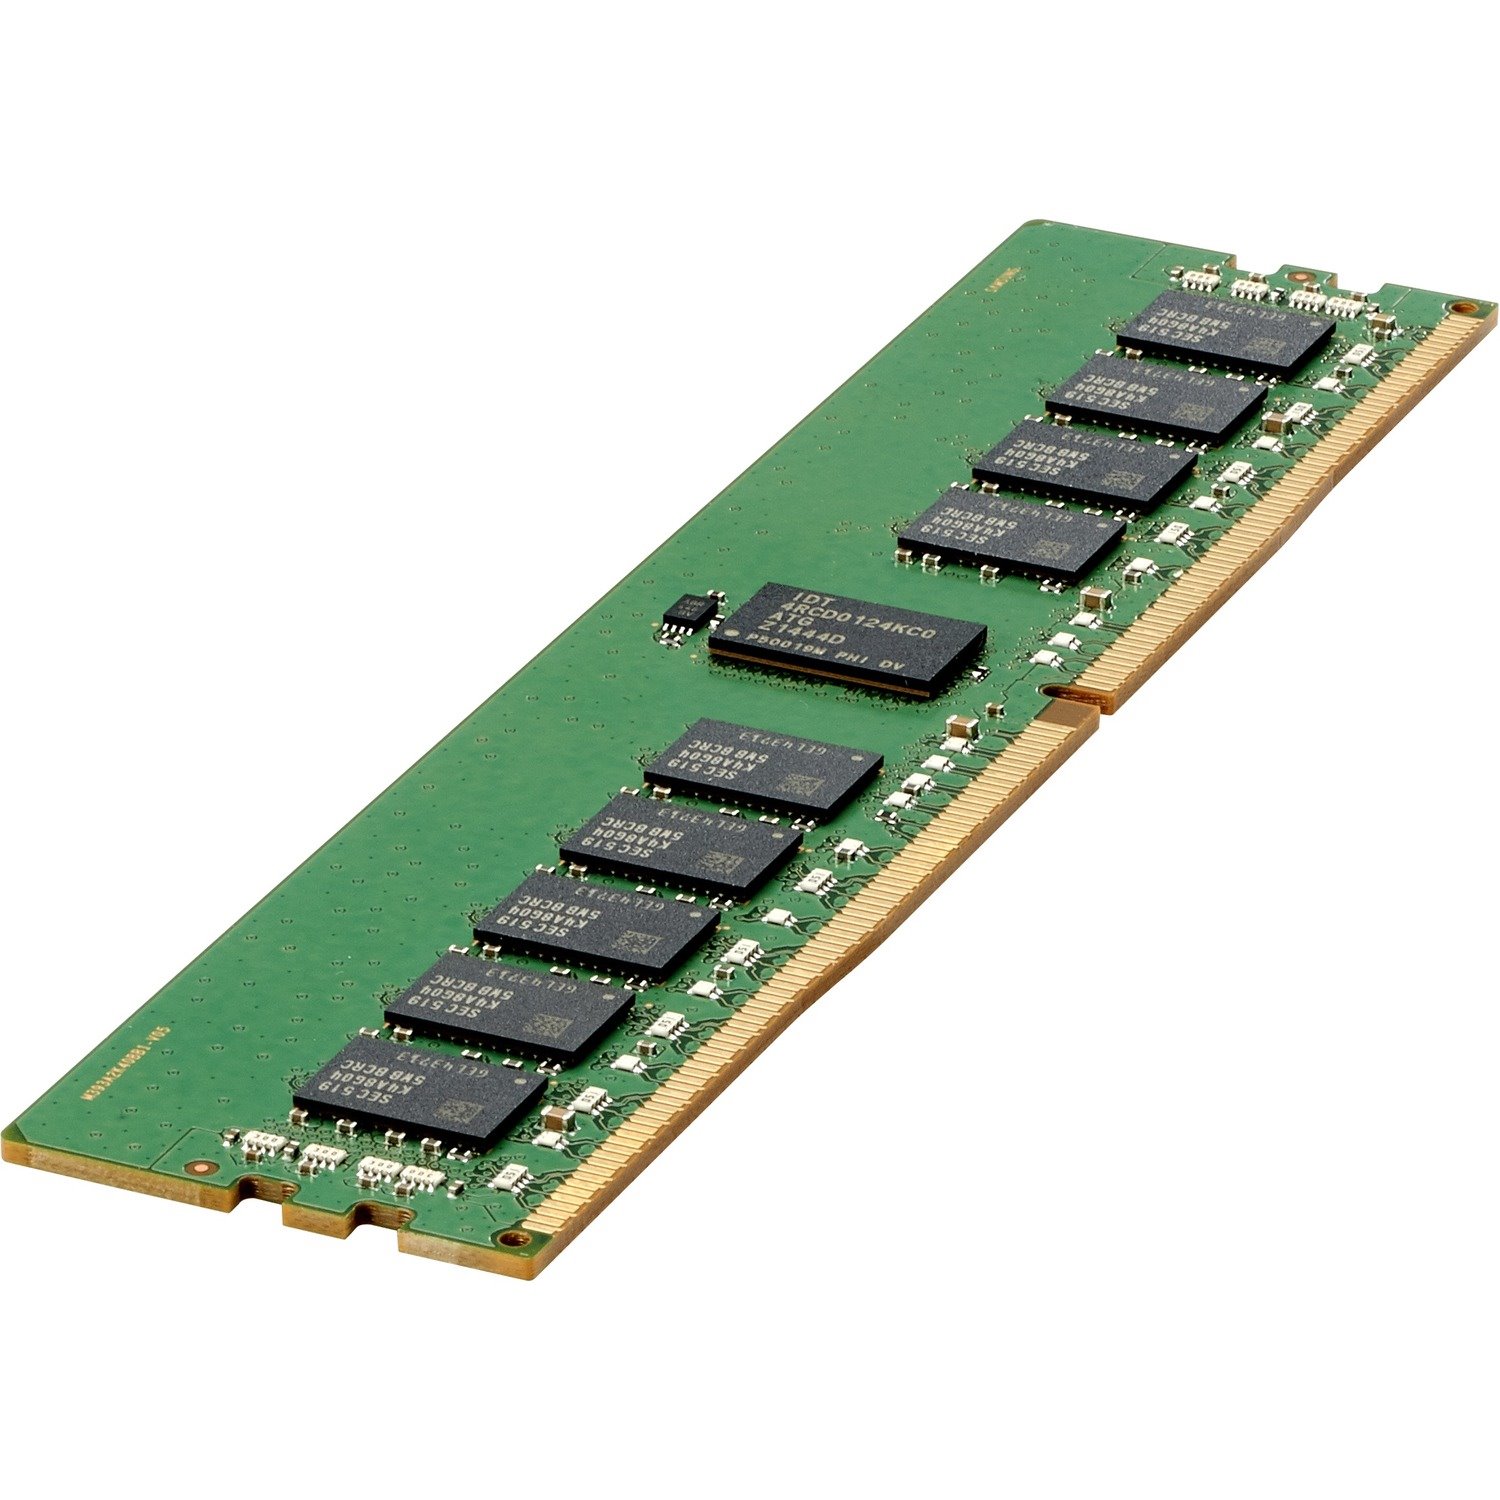 HPE Sourcing SmartMemory 32GB DDR4 SDRAM Memory Module